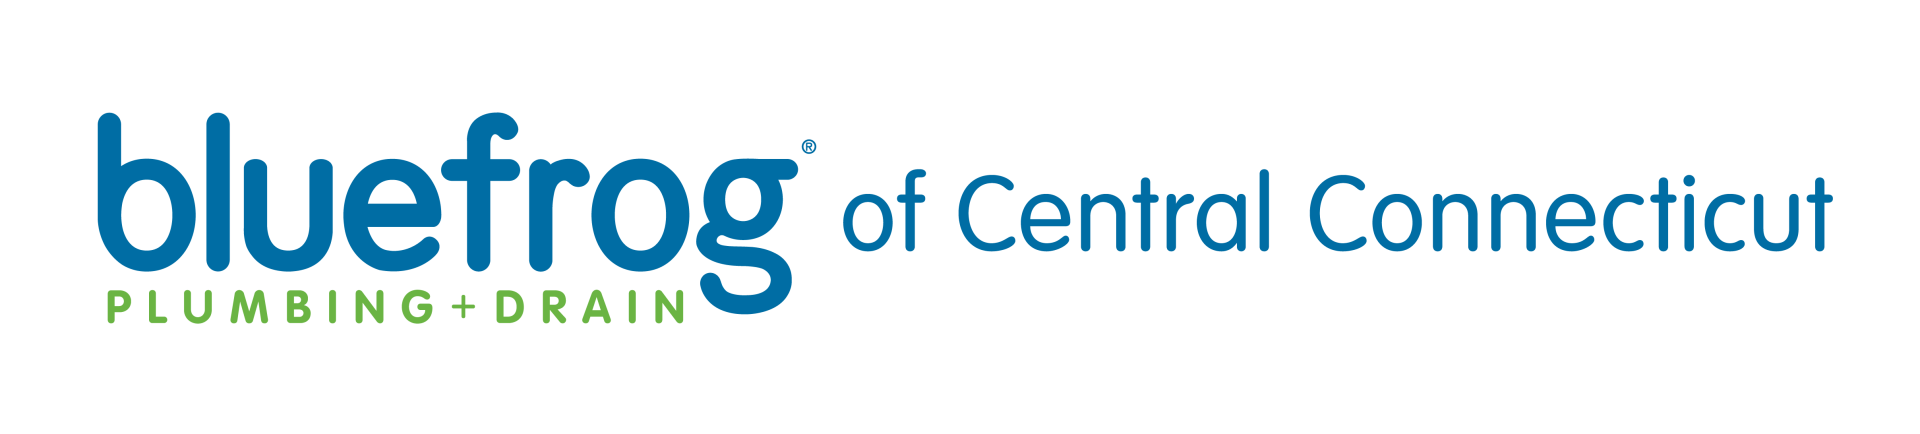 Central Connecticut Logo